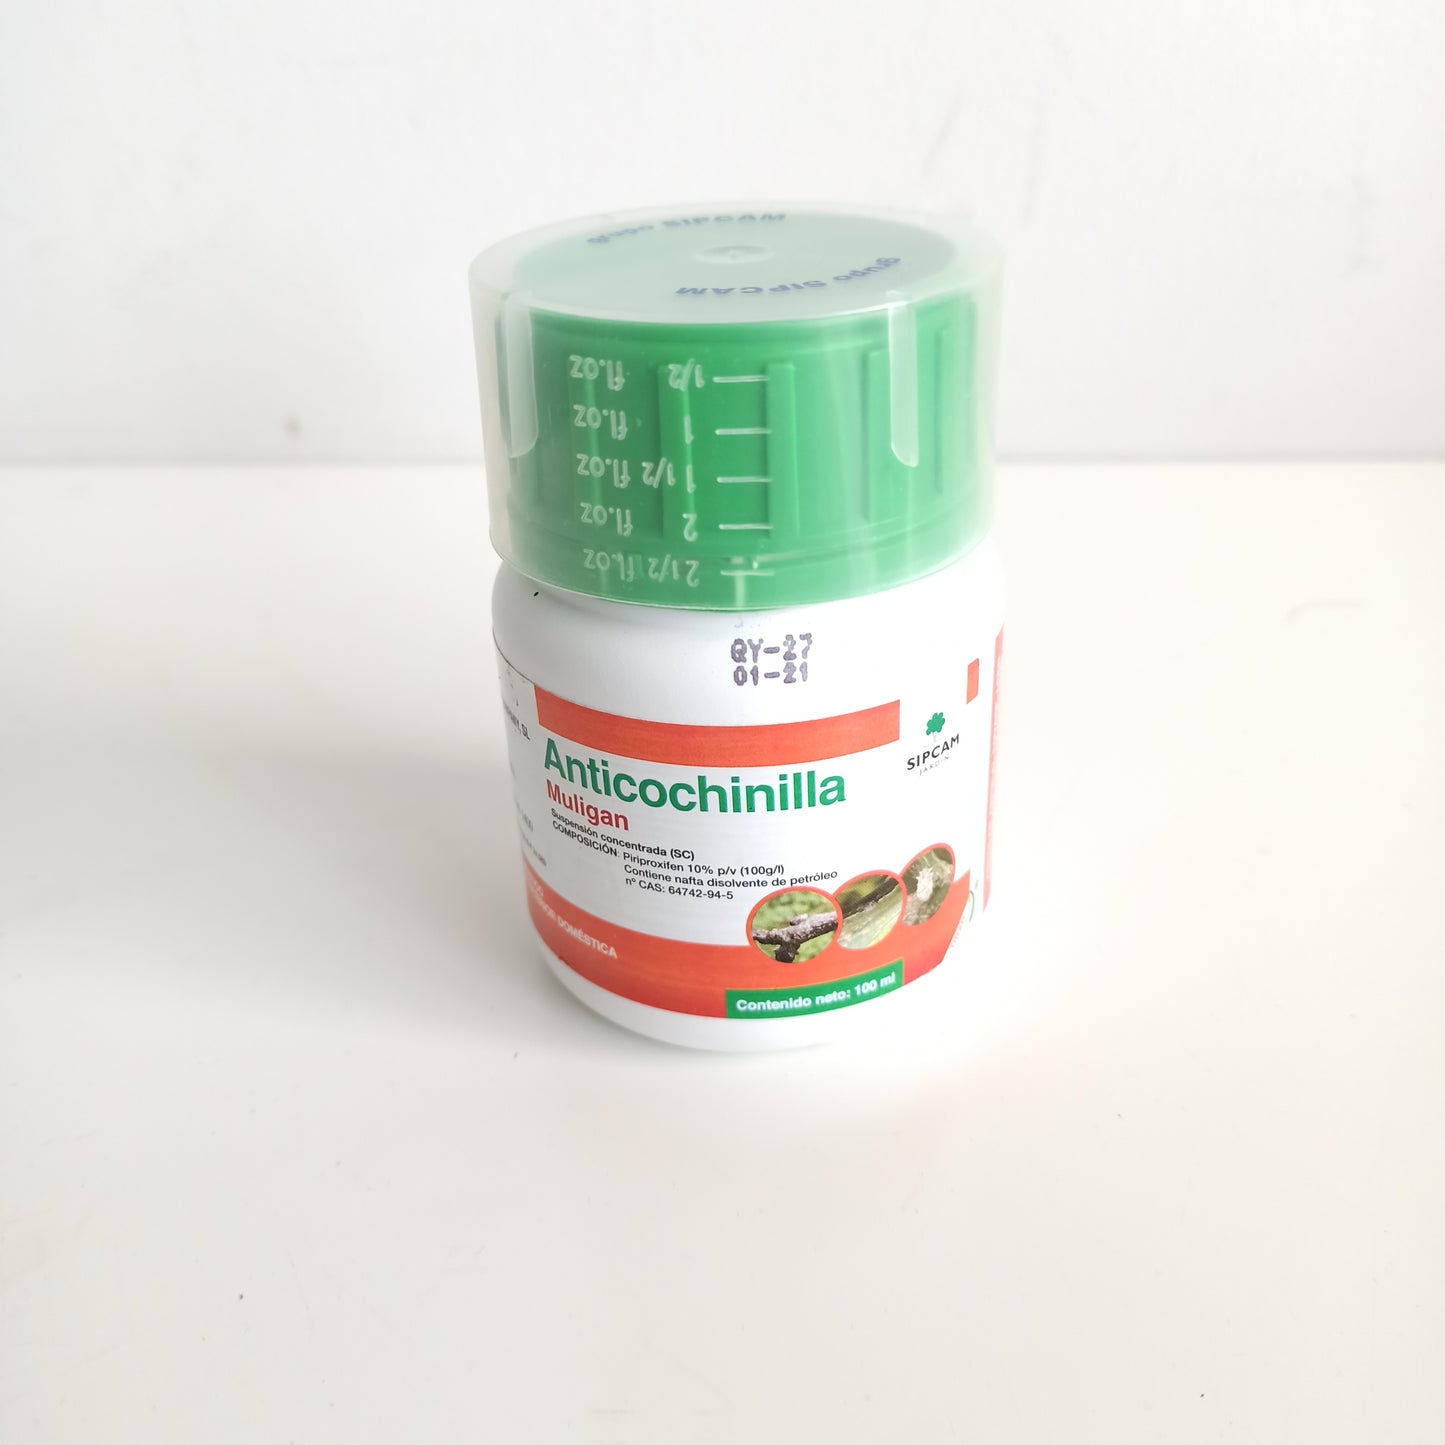 Anticochinilla (Piriproxifen 10% p/v) - Muligan. SIPCAM JARDÍN (10 ml)